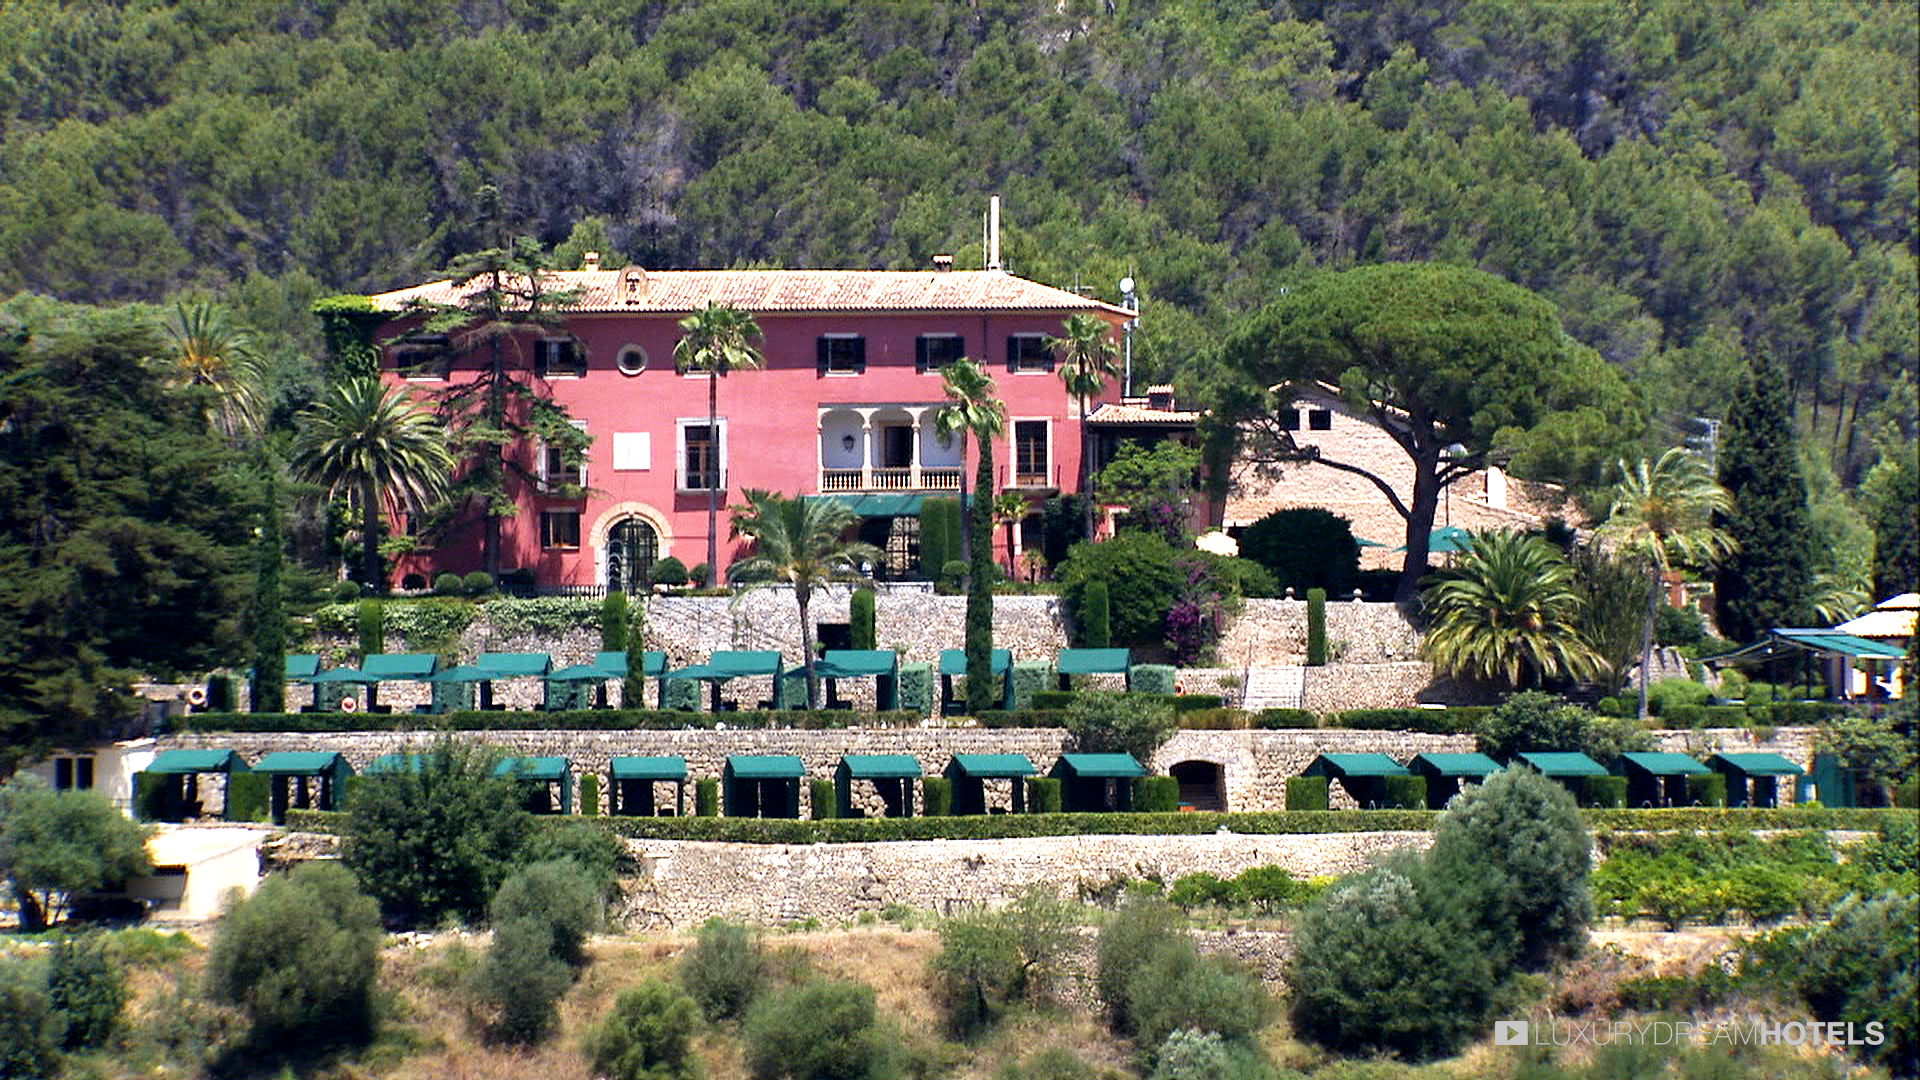 Luxury Gran Hotel Son Net, Puigpunyent - Majorque – Îles Baléares, Spain - Luxury Dream Hotels